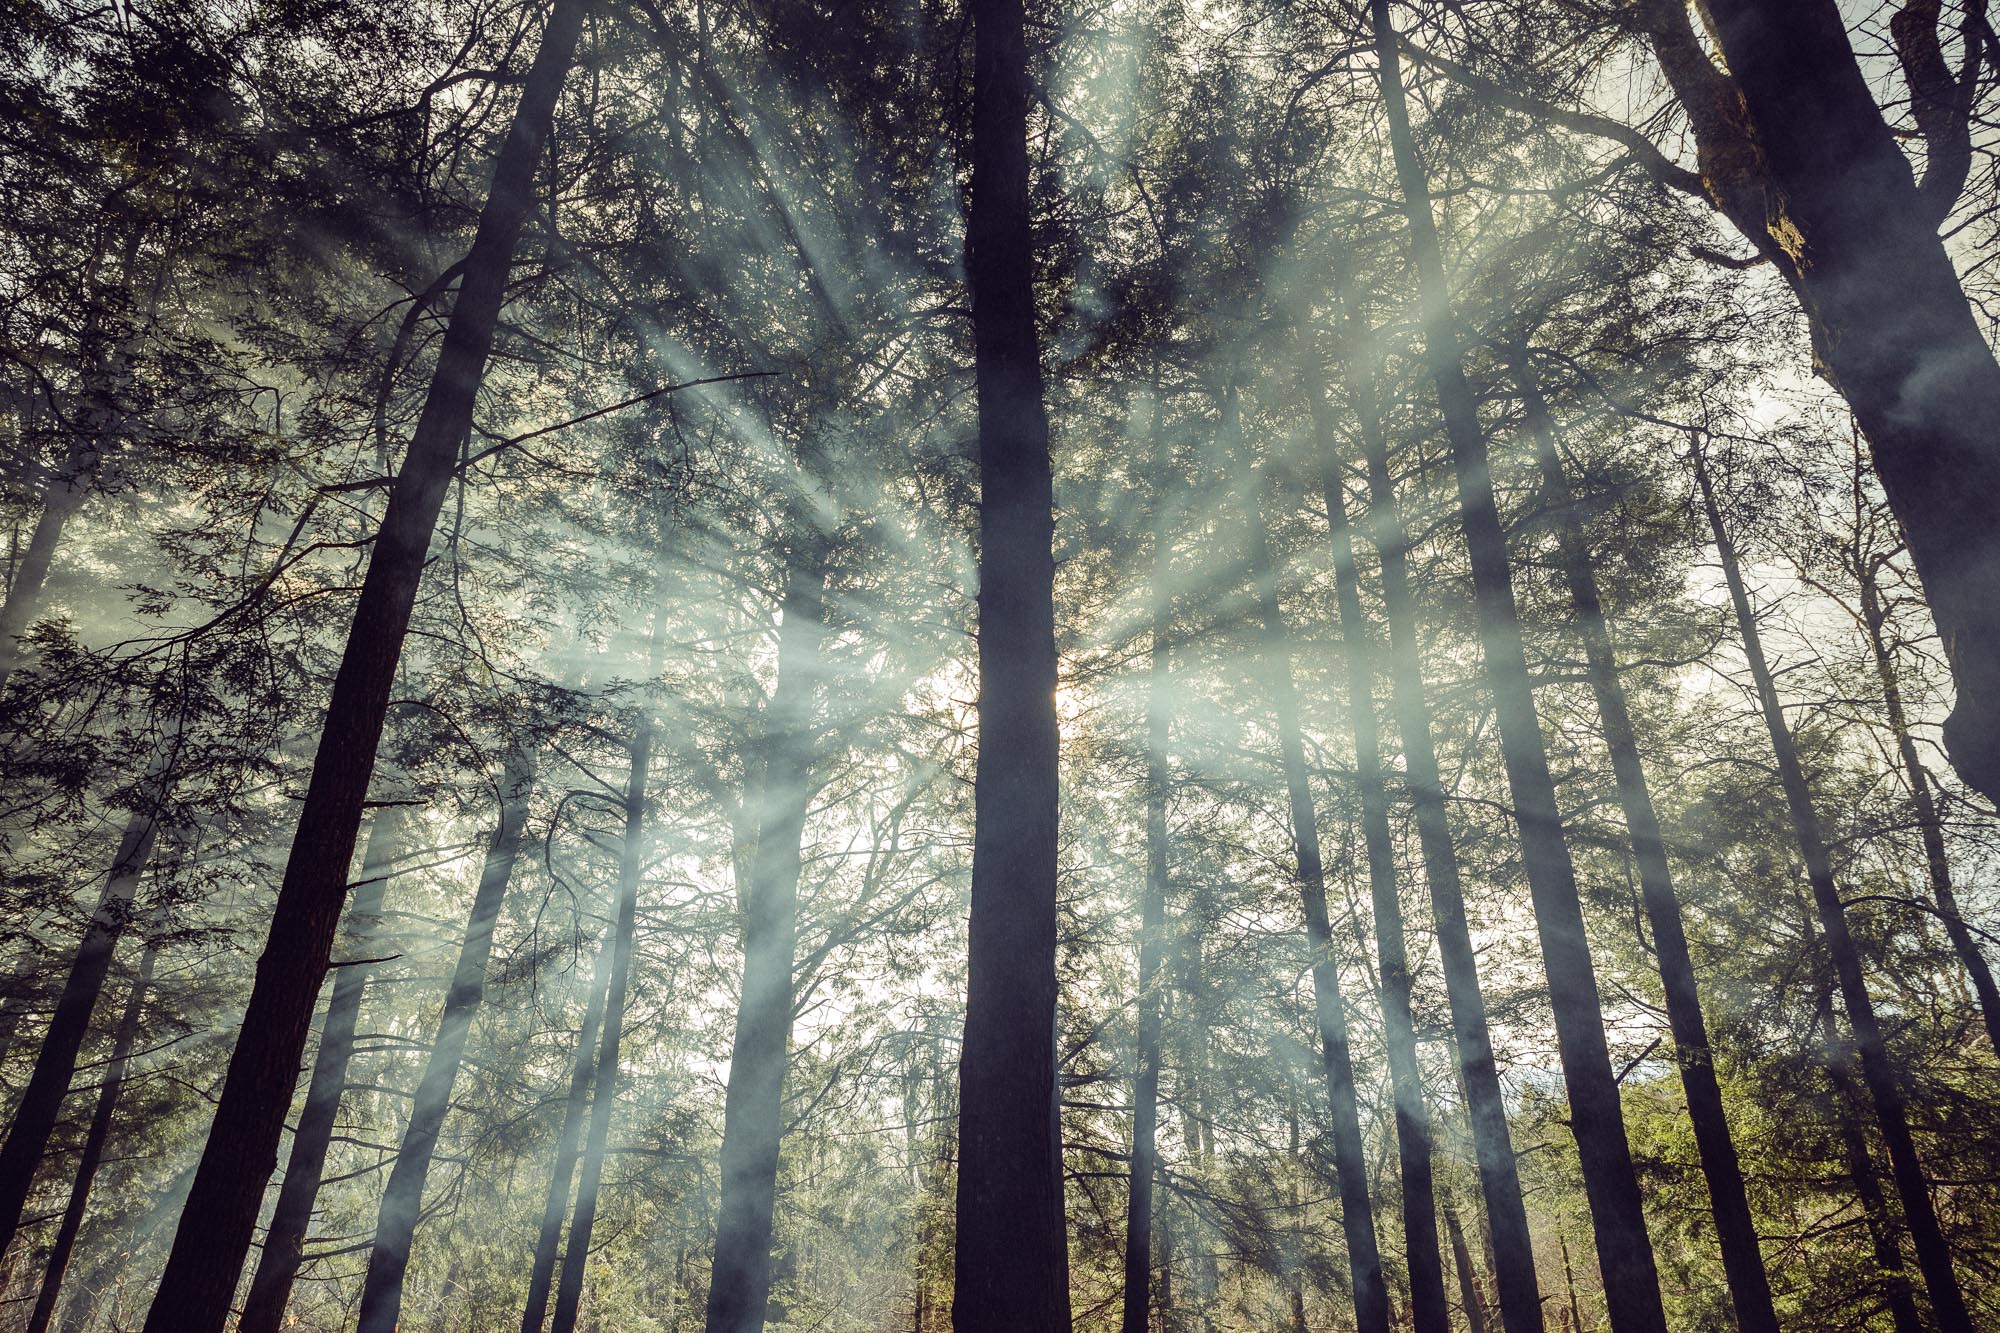 Light shining through trees